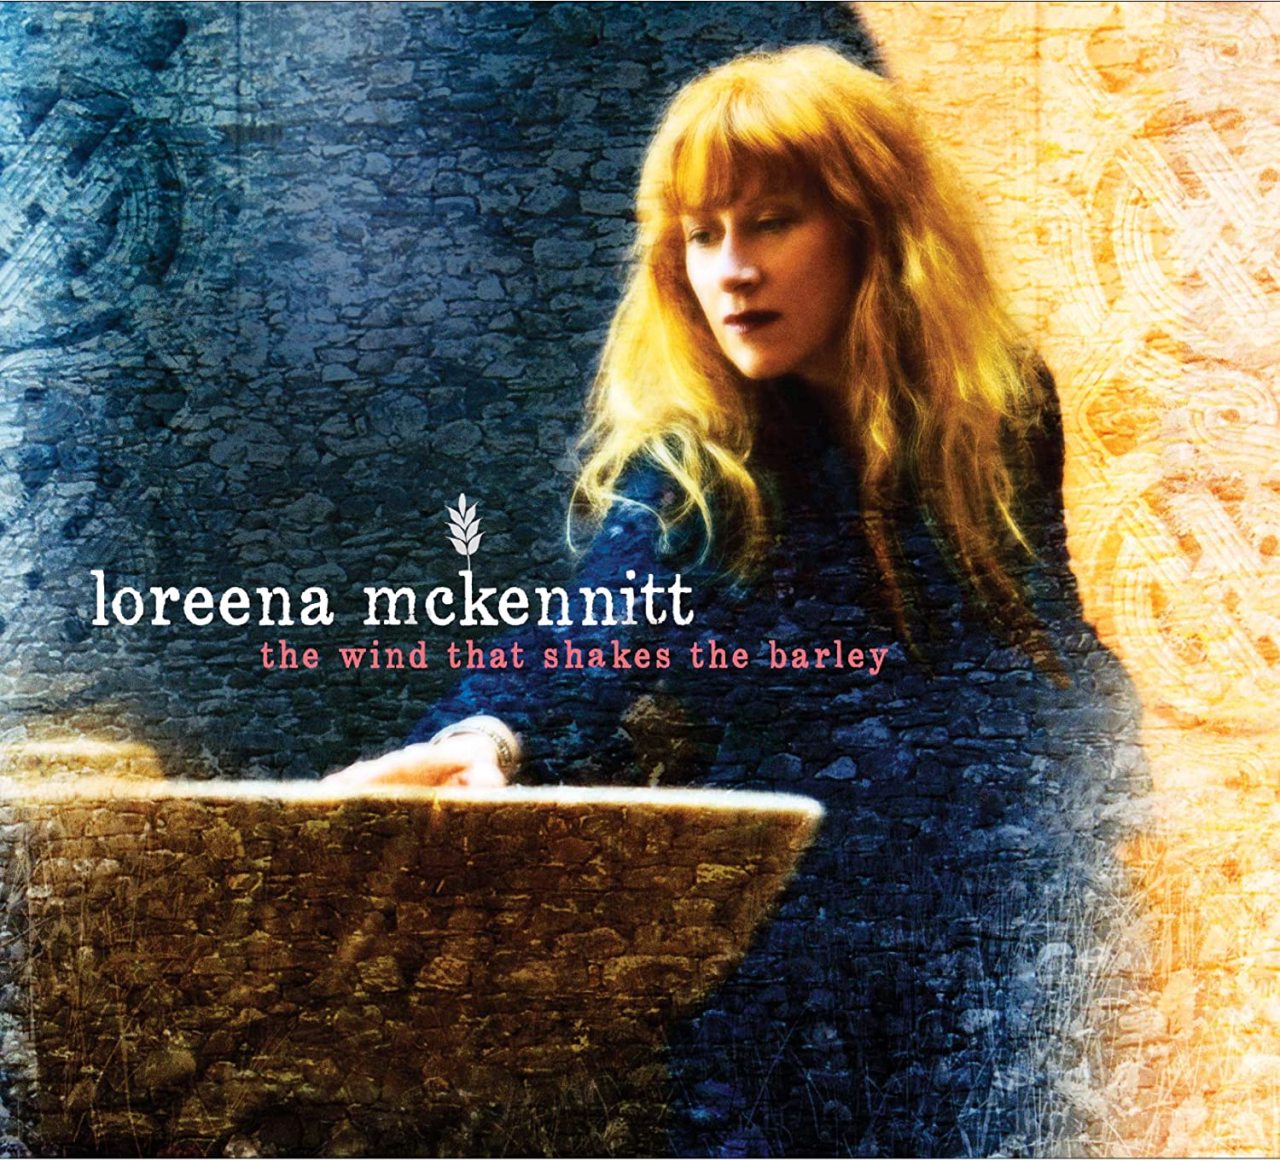 LOREENA McKENNITT - THE WIND THAT SHAKES THE HARLEY (2010) - CD DIGIPACK SIFIR